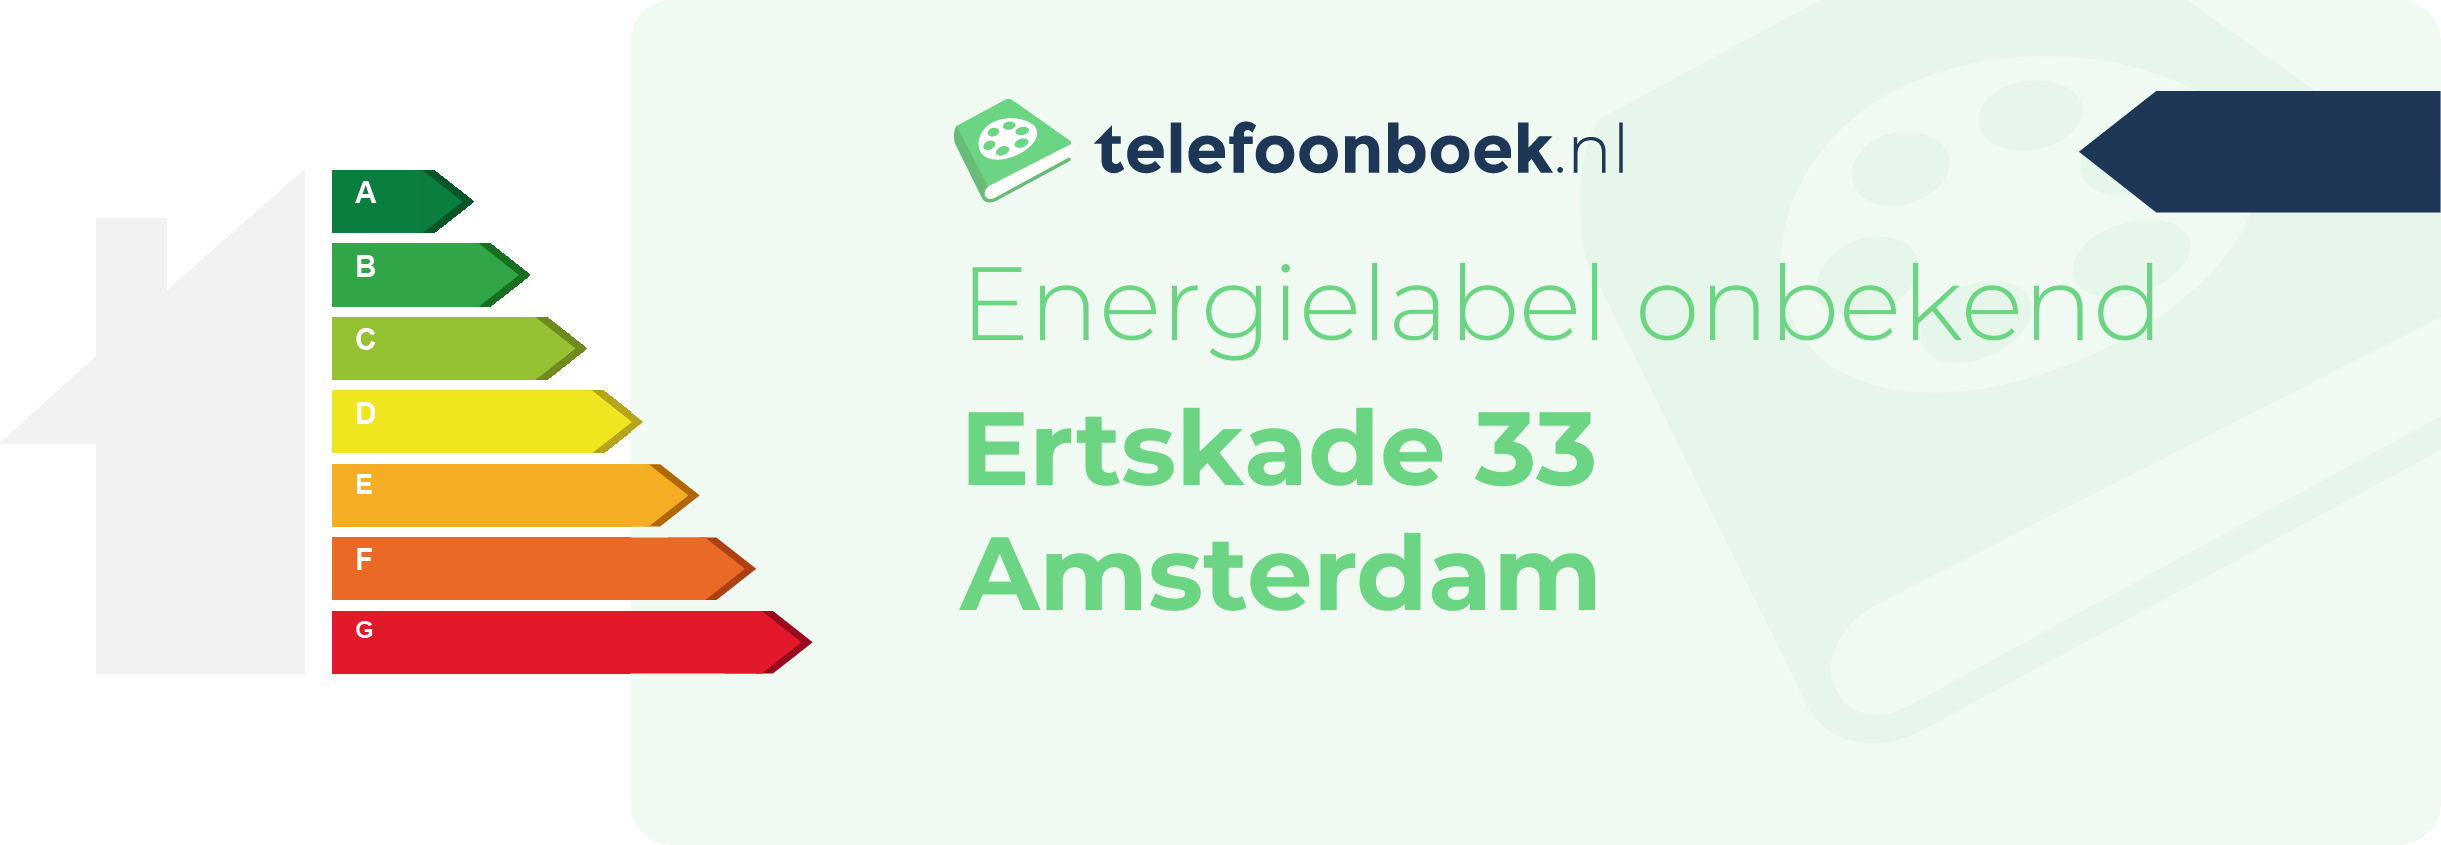 Energielabel Ertskade 33 Amsterdam